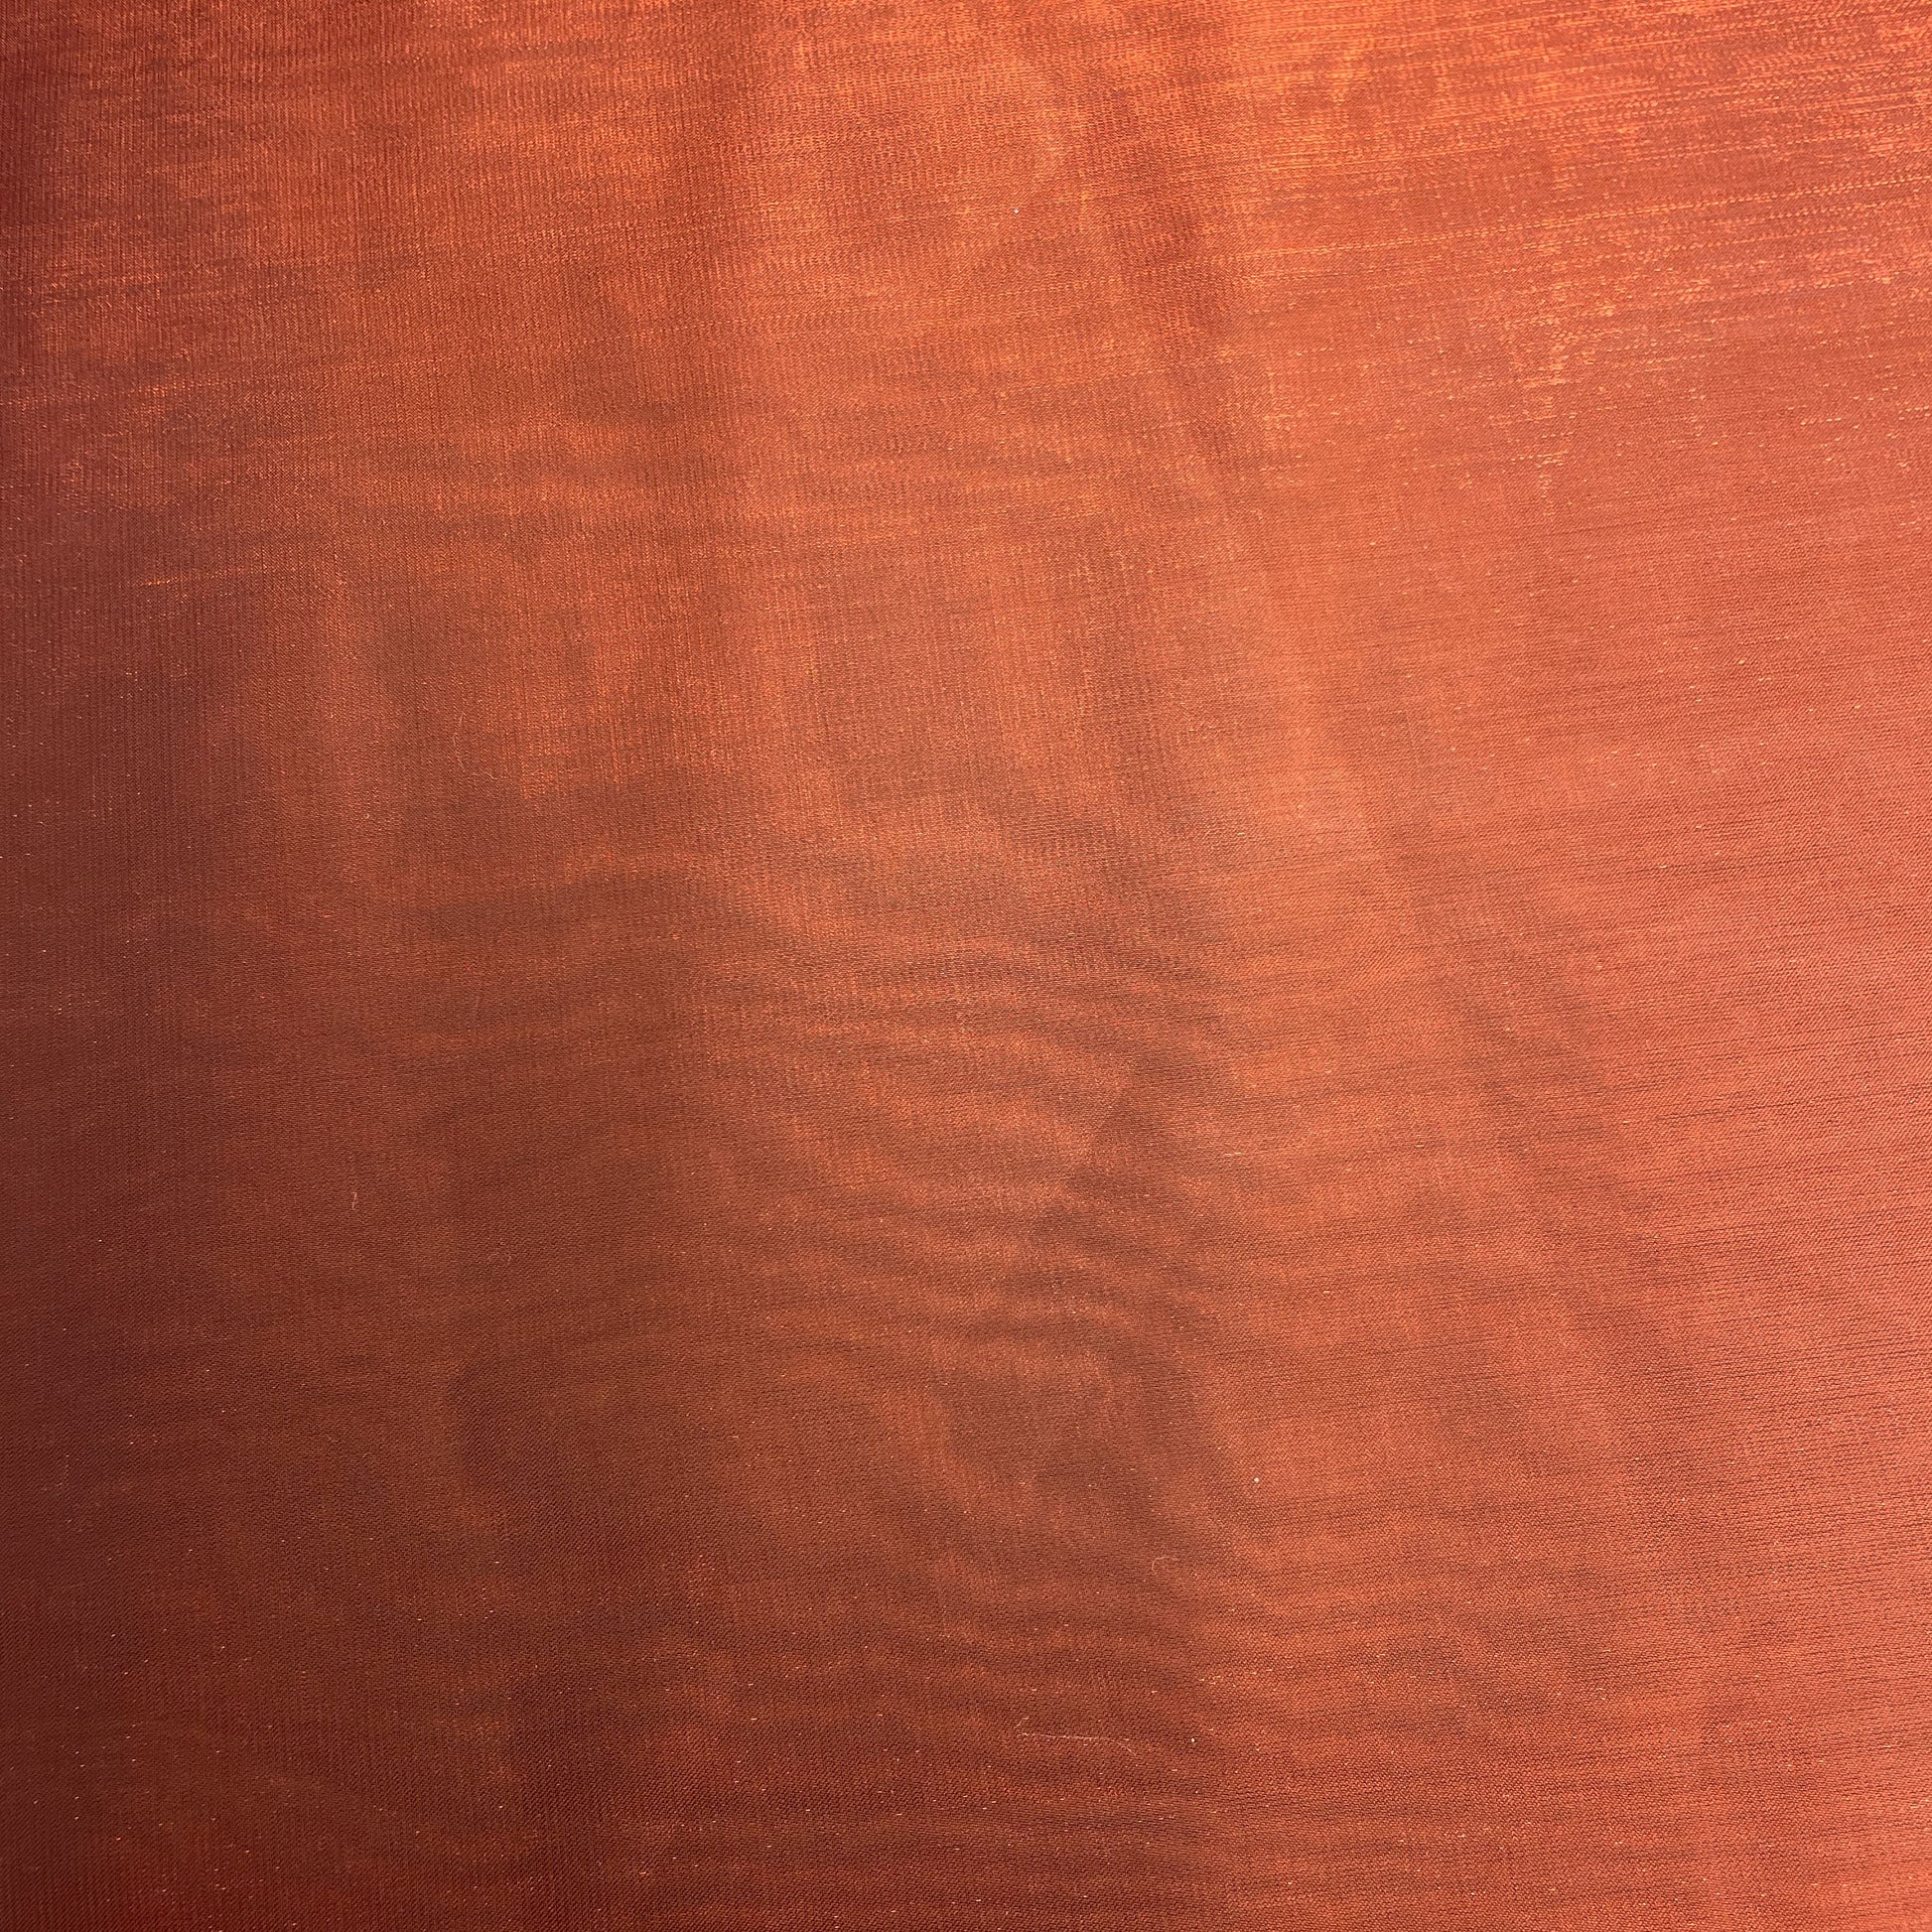 Premium Red Solid Organza Satin Fabric